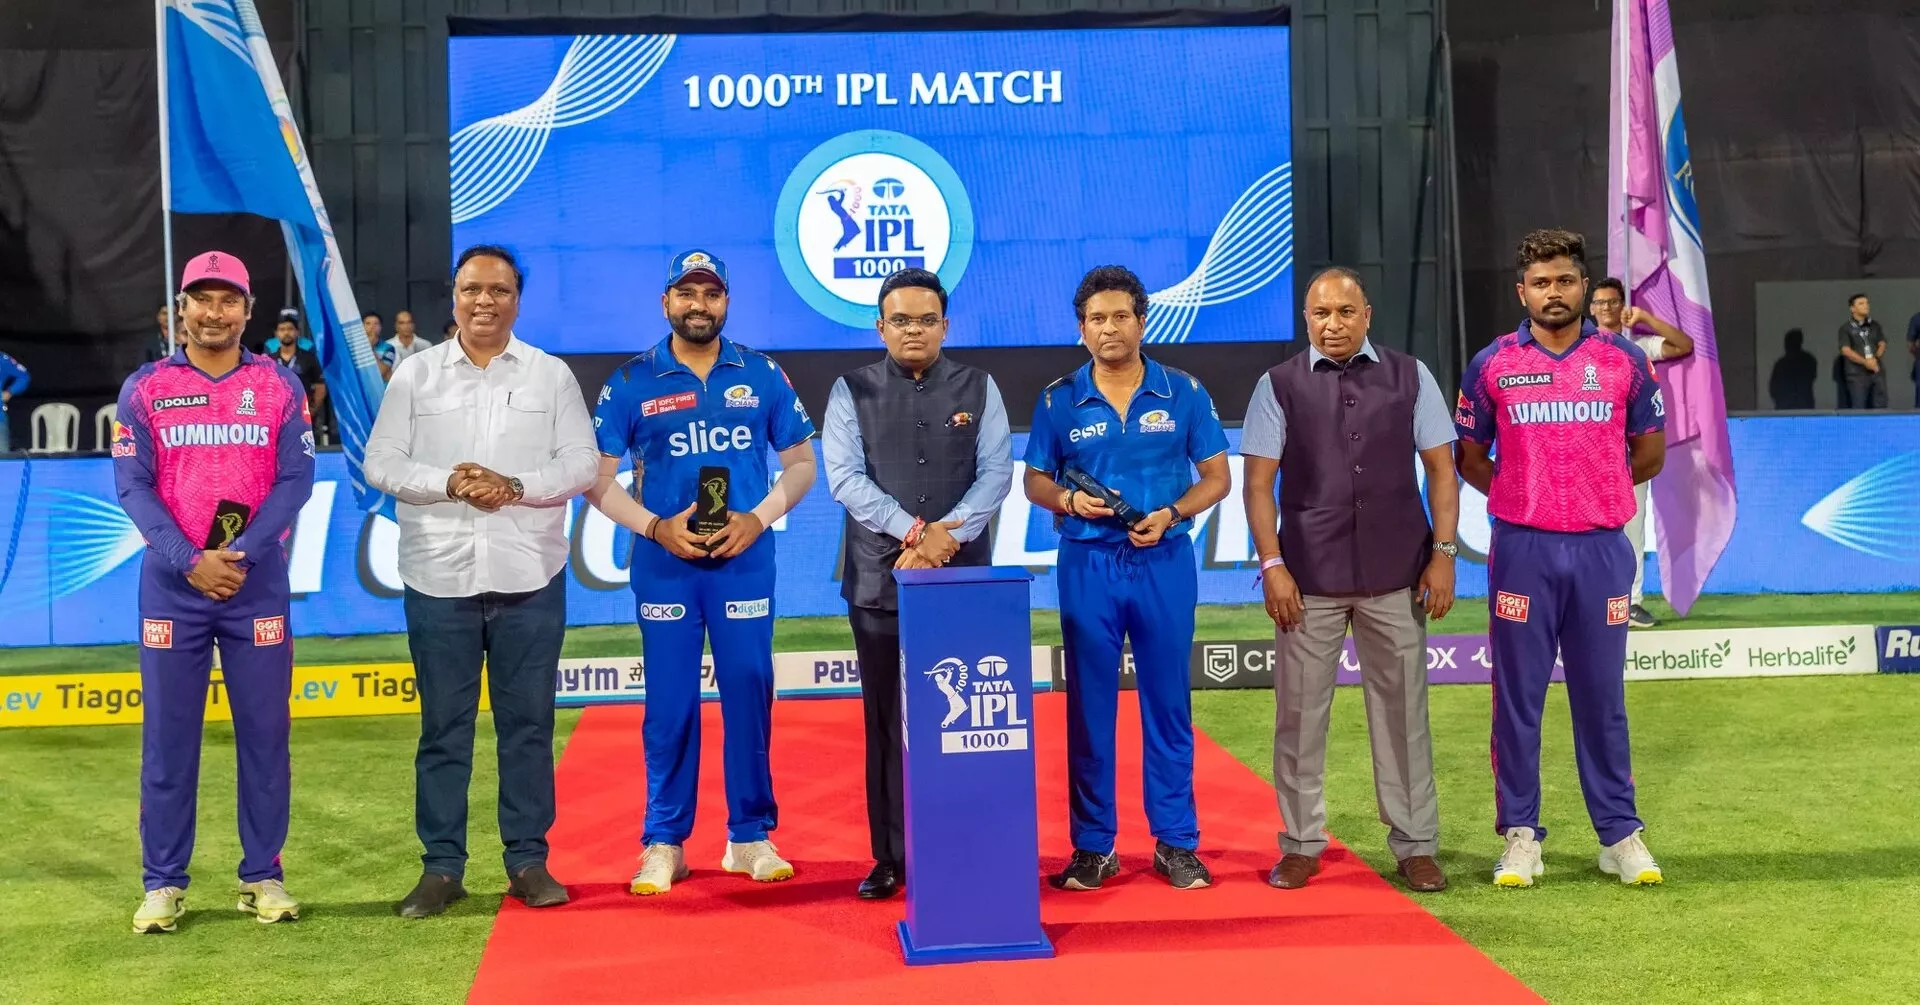 Watch: Rohit Sharma, Sanju Samson, Sachin Tendulkar & Kumar Sangakkara presented with mementos on occasion of 1000th IPL match